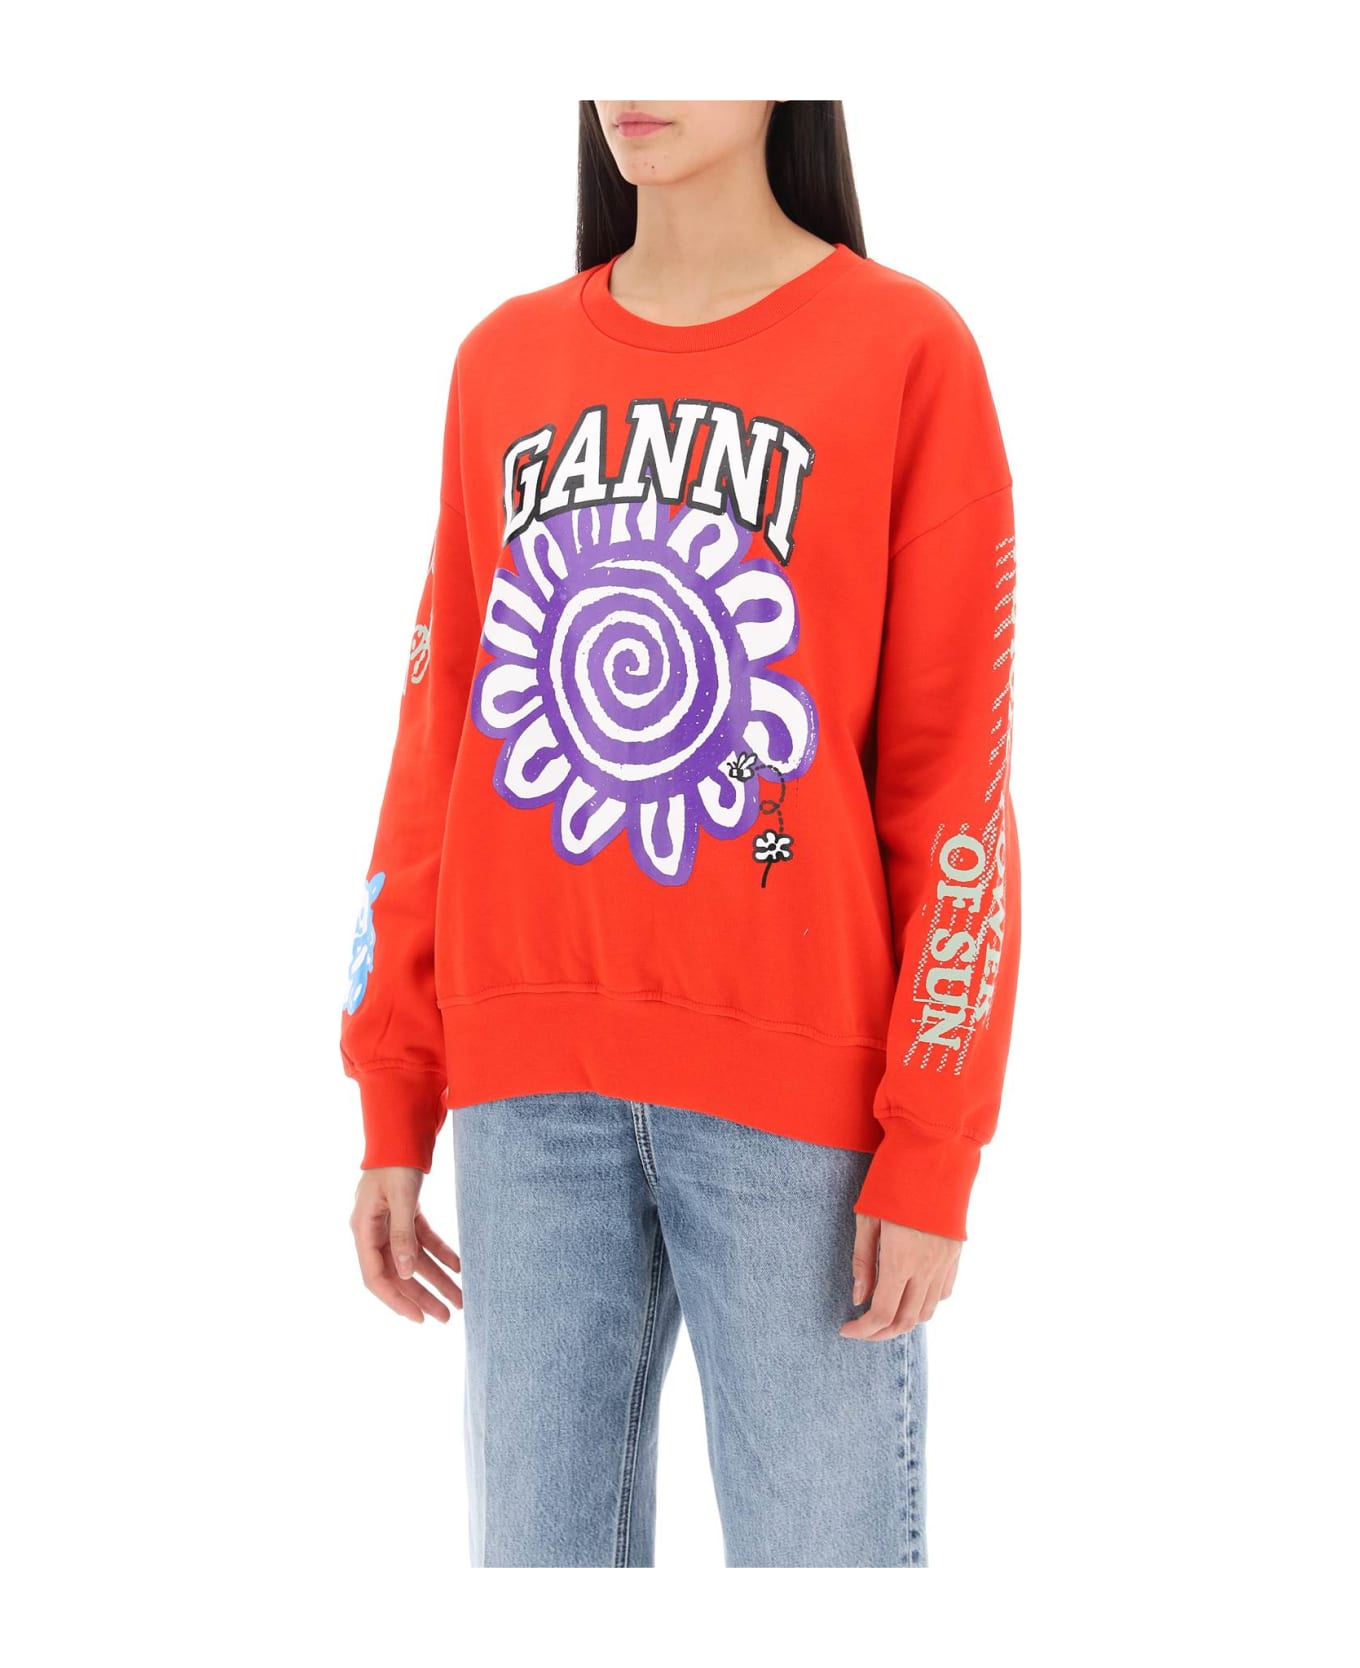 Ganni Sweatshirt With Graphic Prints - RED